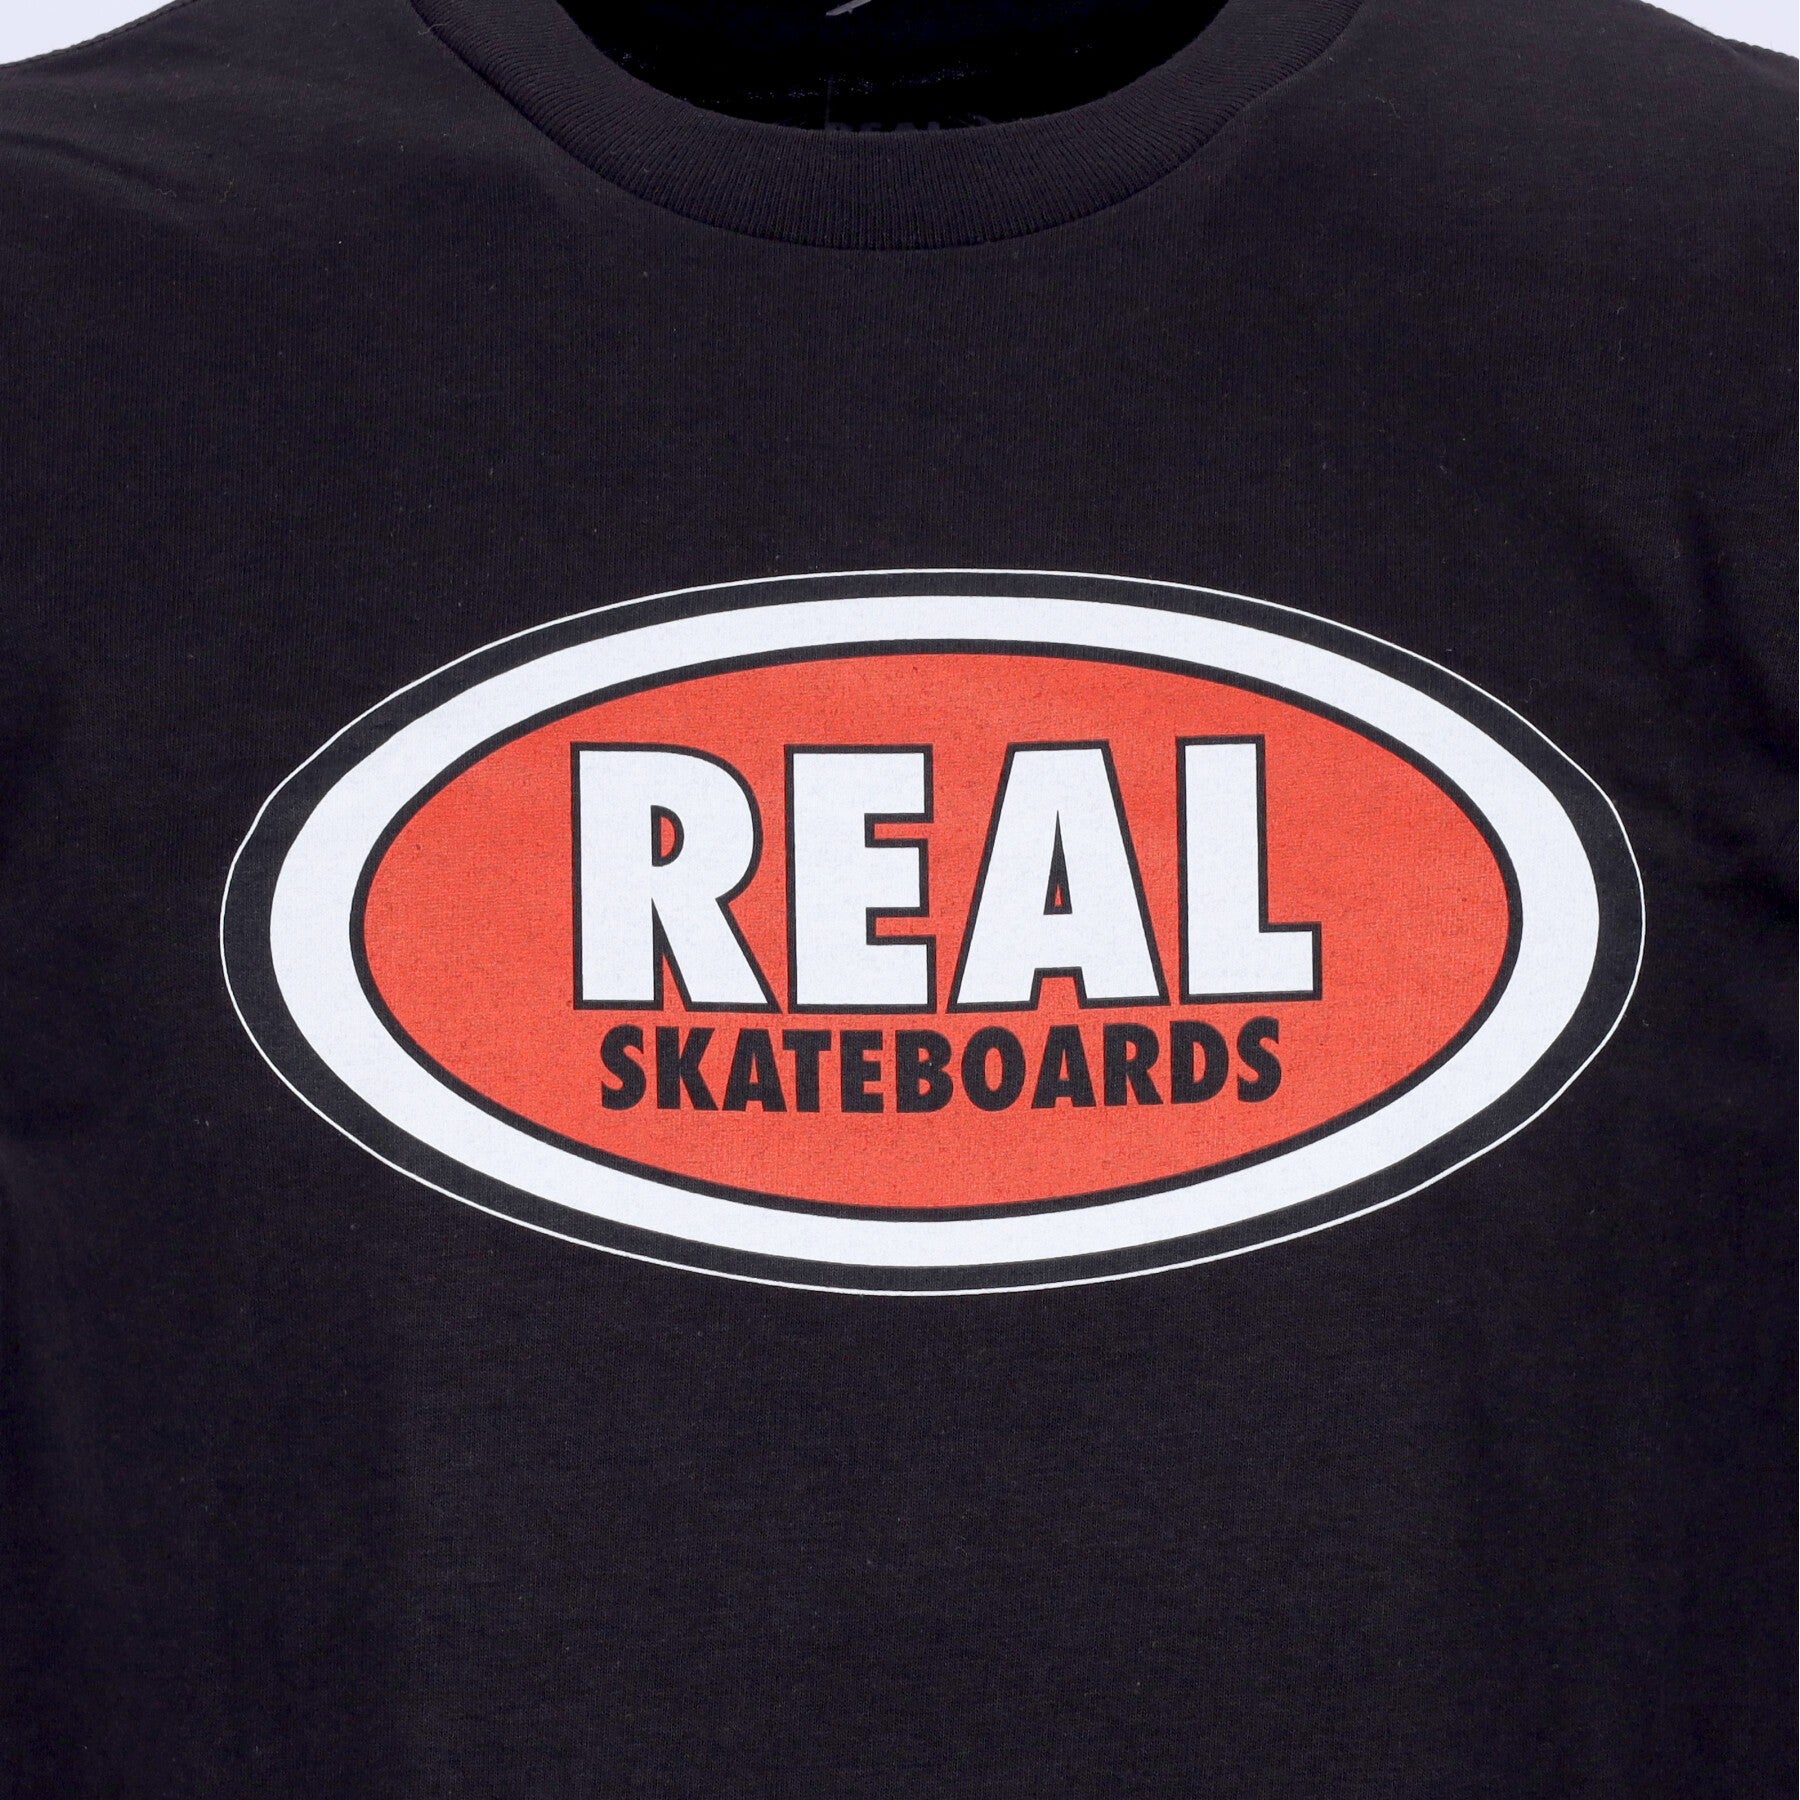 Real Skateboards, Maglietta Uomo Oval Tee, 